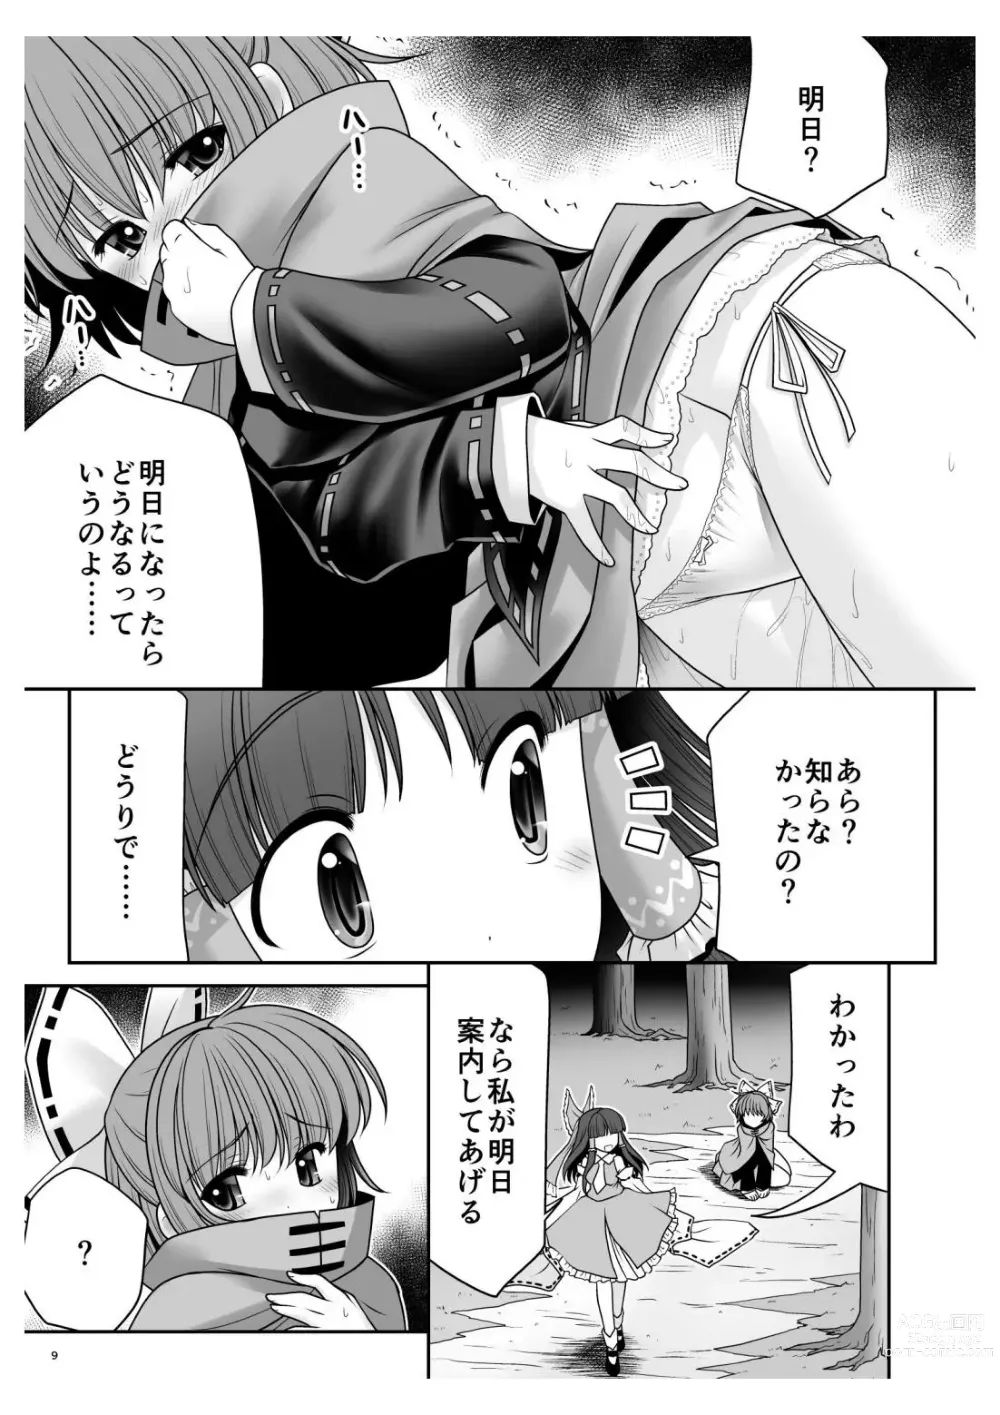 Page 9 of doujinshi Rojiura Rankoukai e Youkoso! ver 2.0